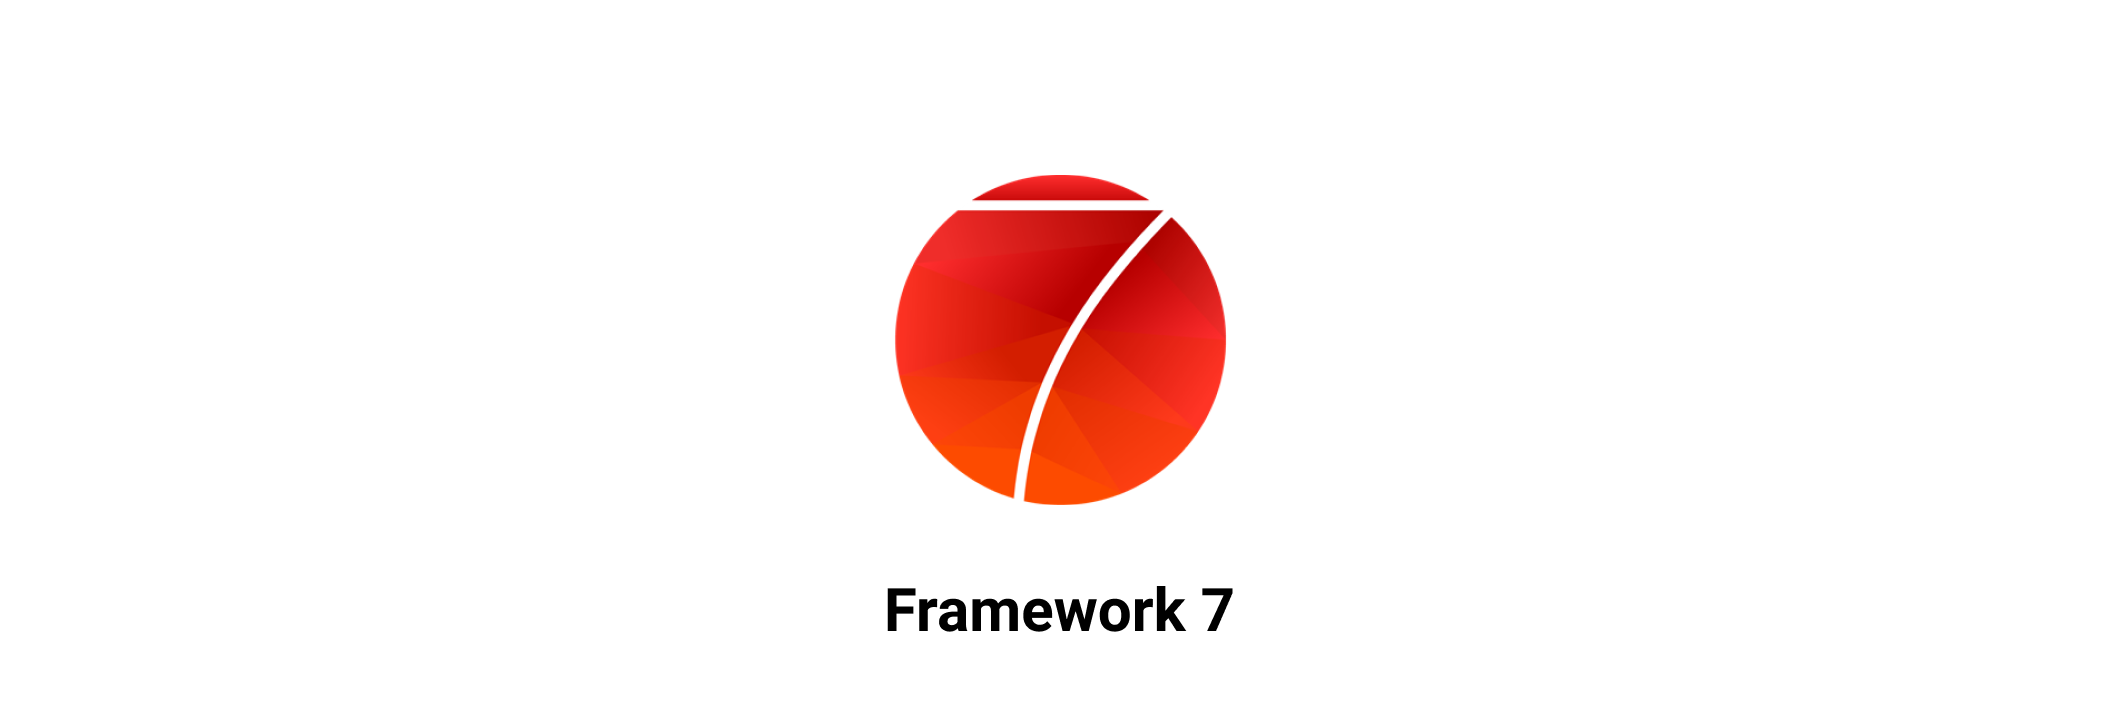 Framework 7-1